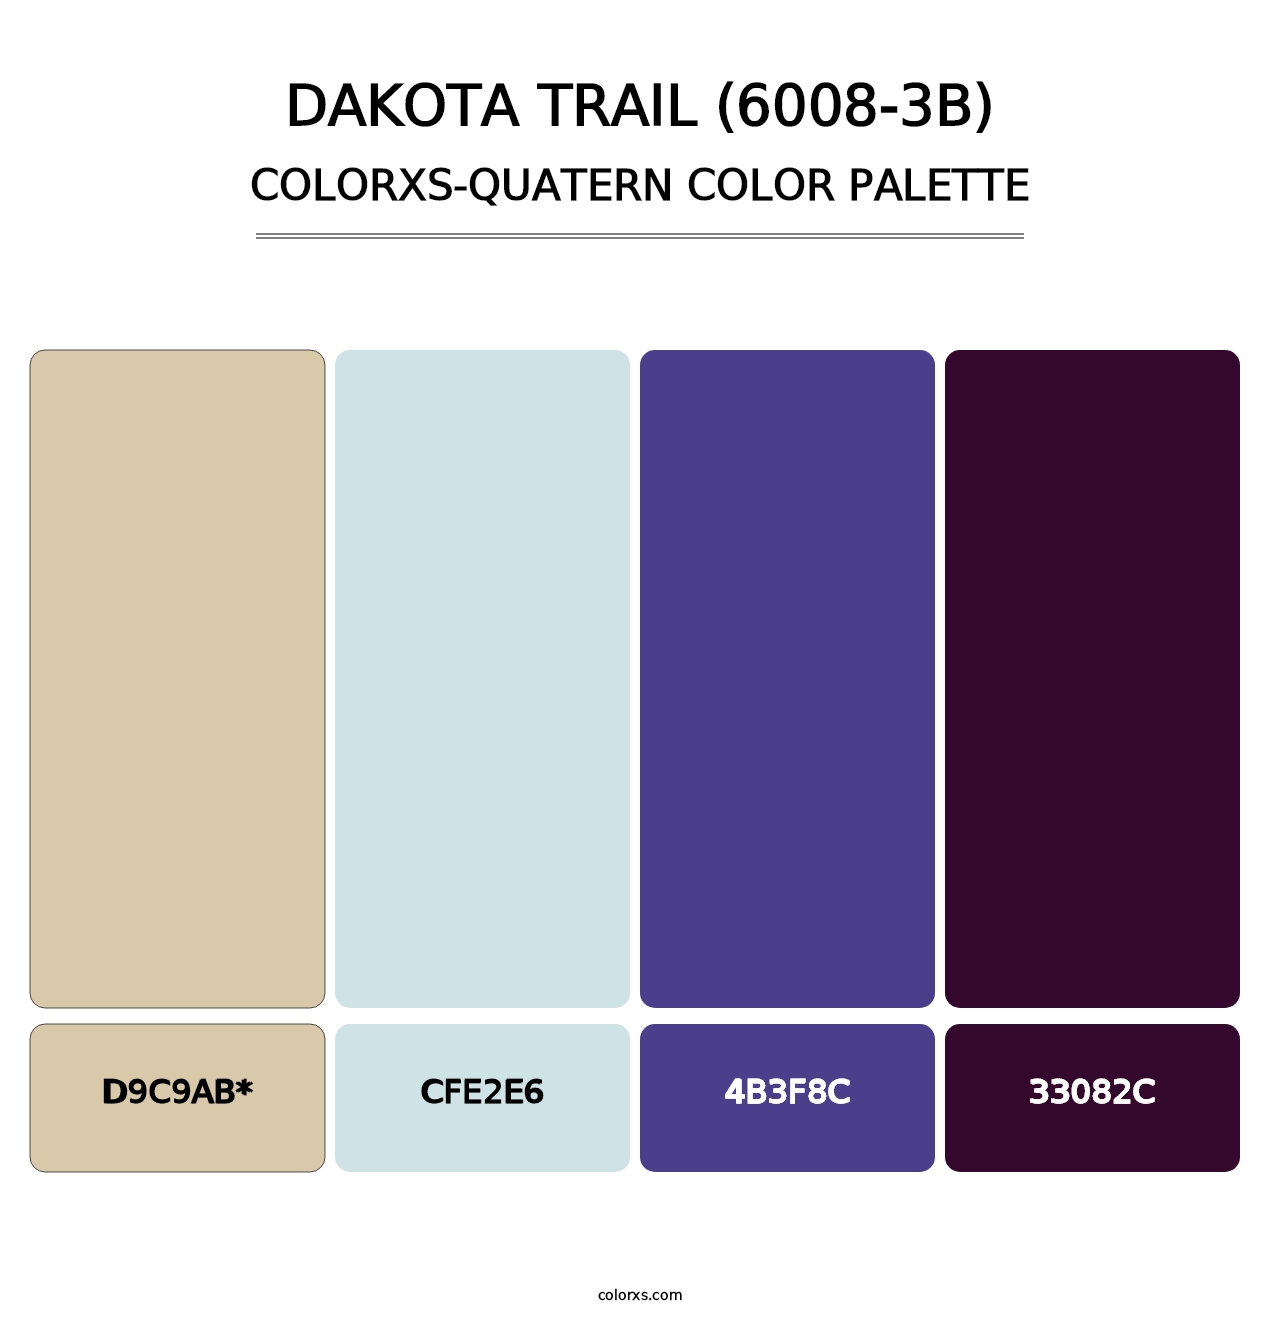 Dakota Trail (6008-3B) - Colorxs Quatern Palette